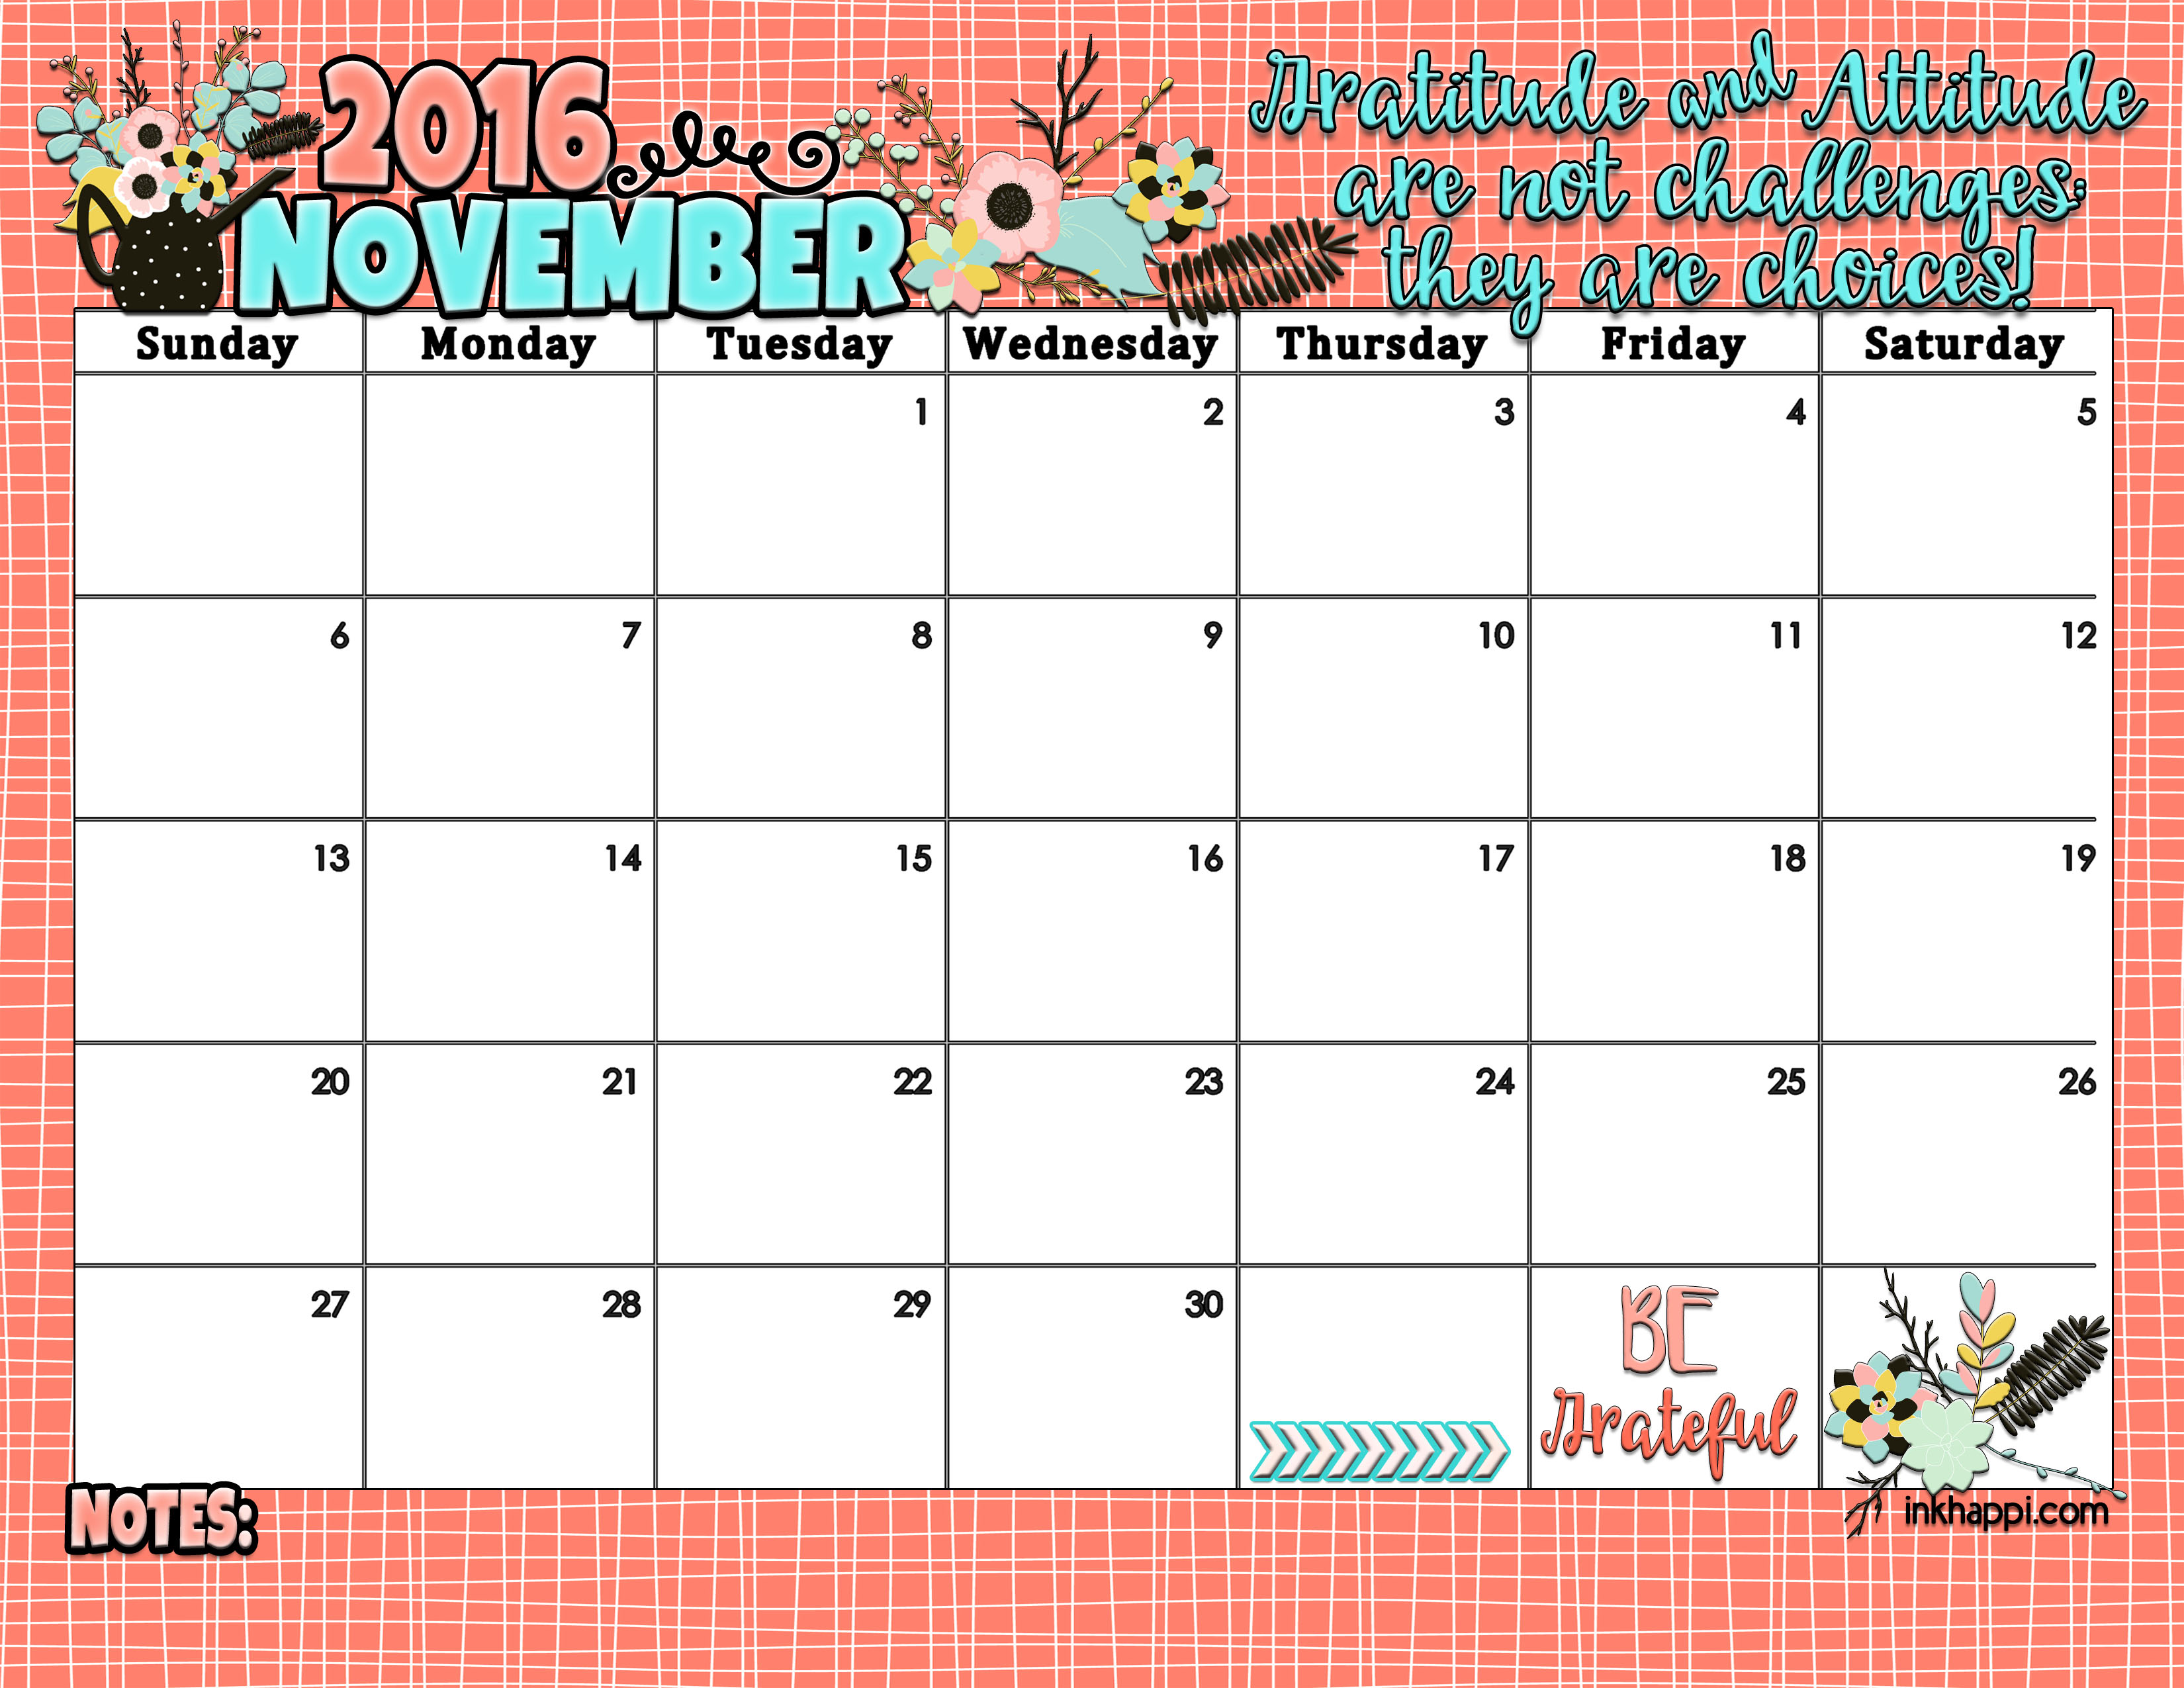 November 2016 Calendar and Print inkhappi